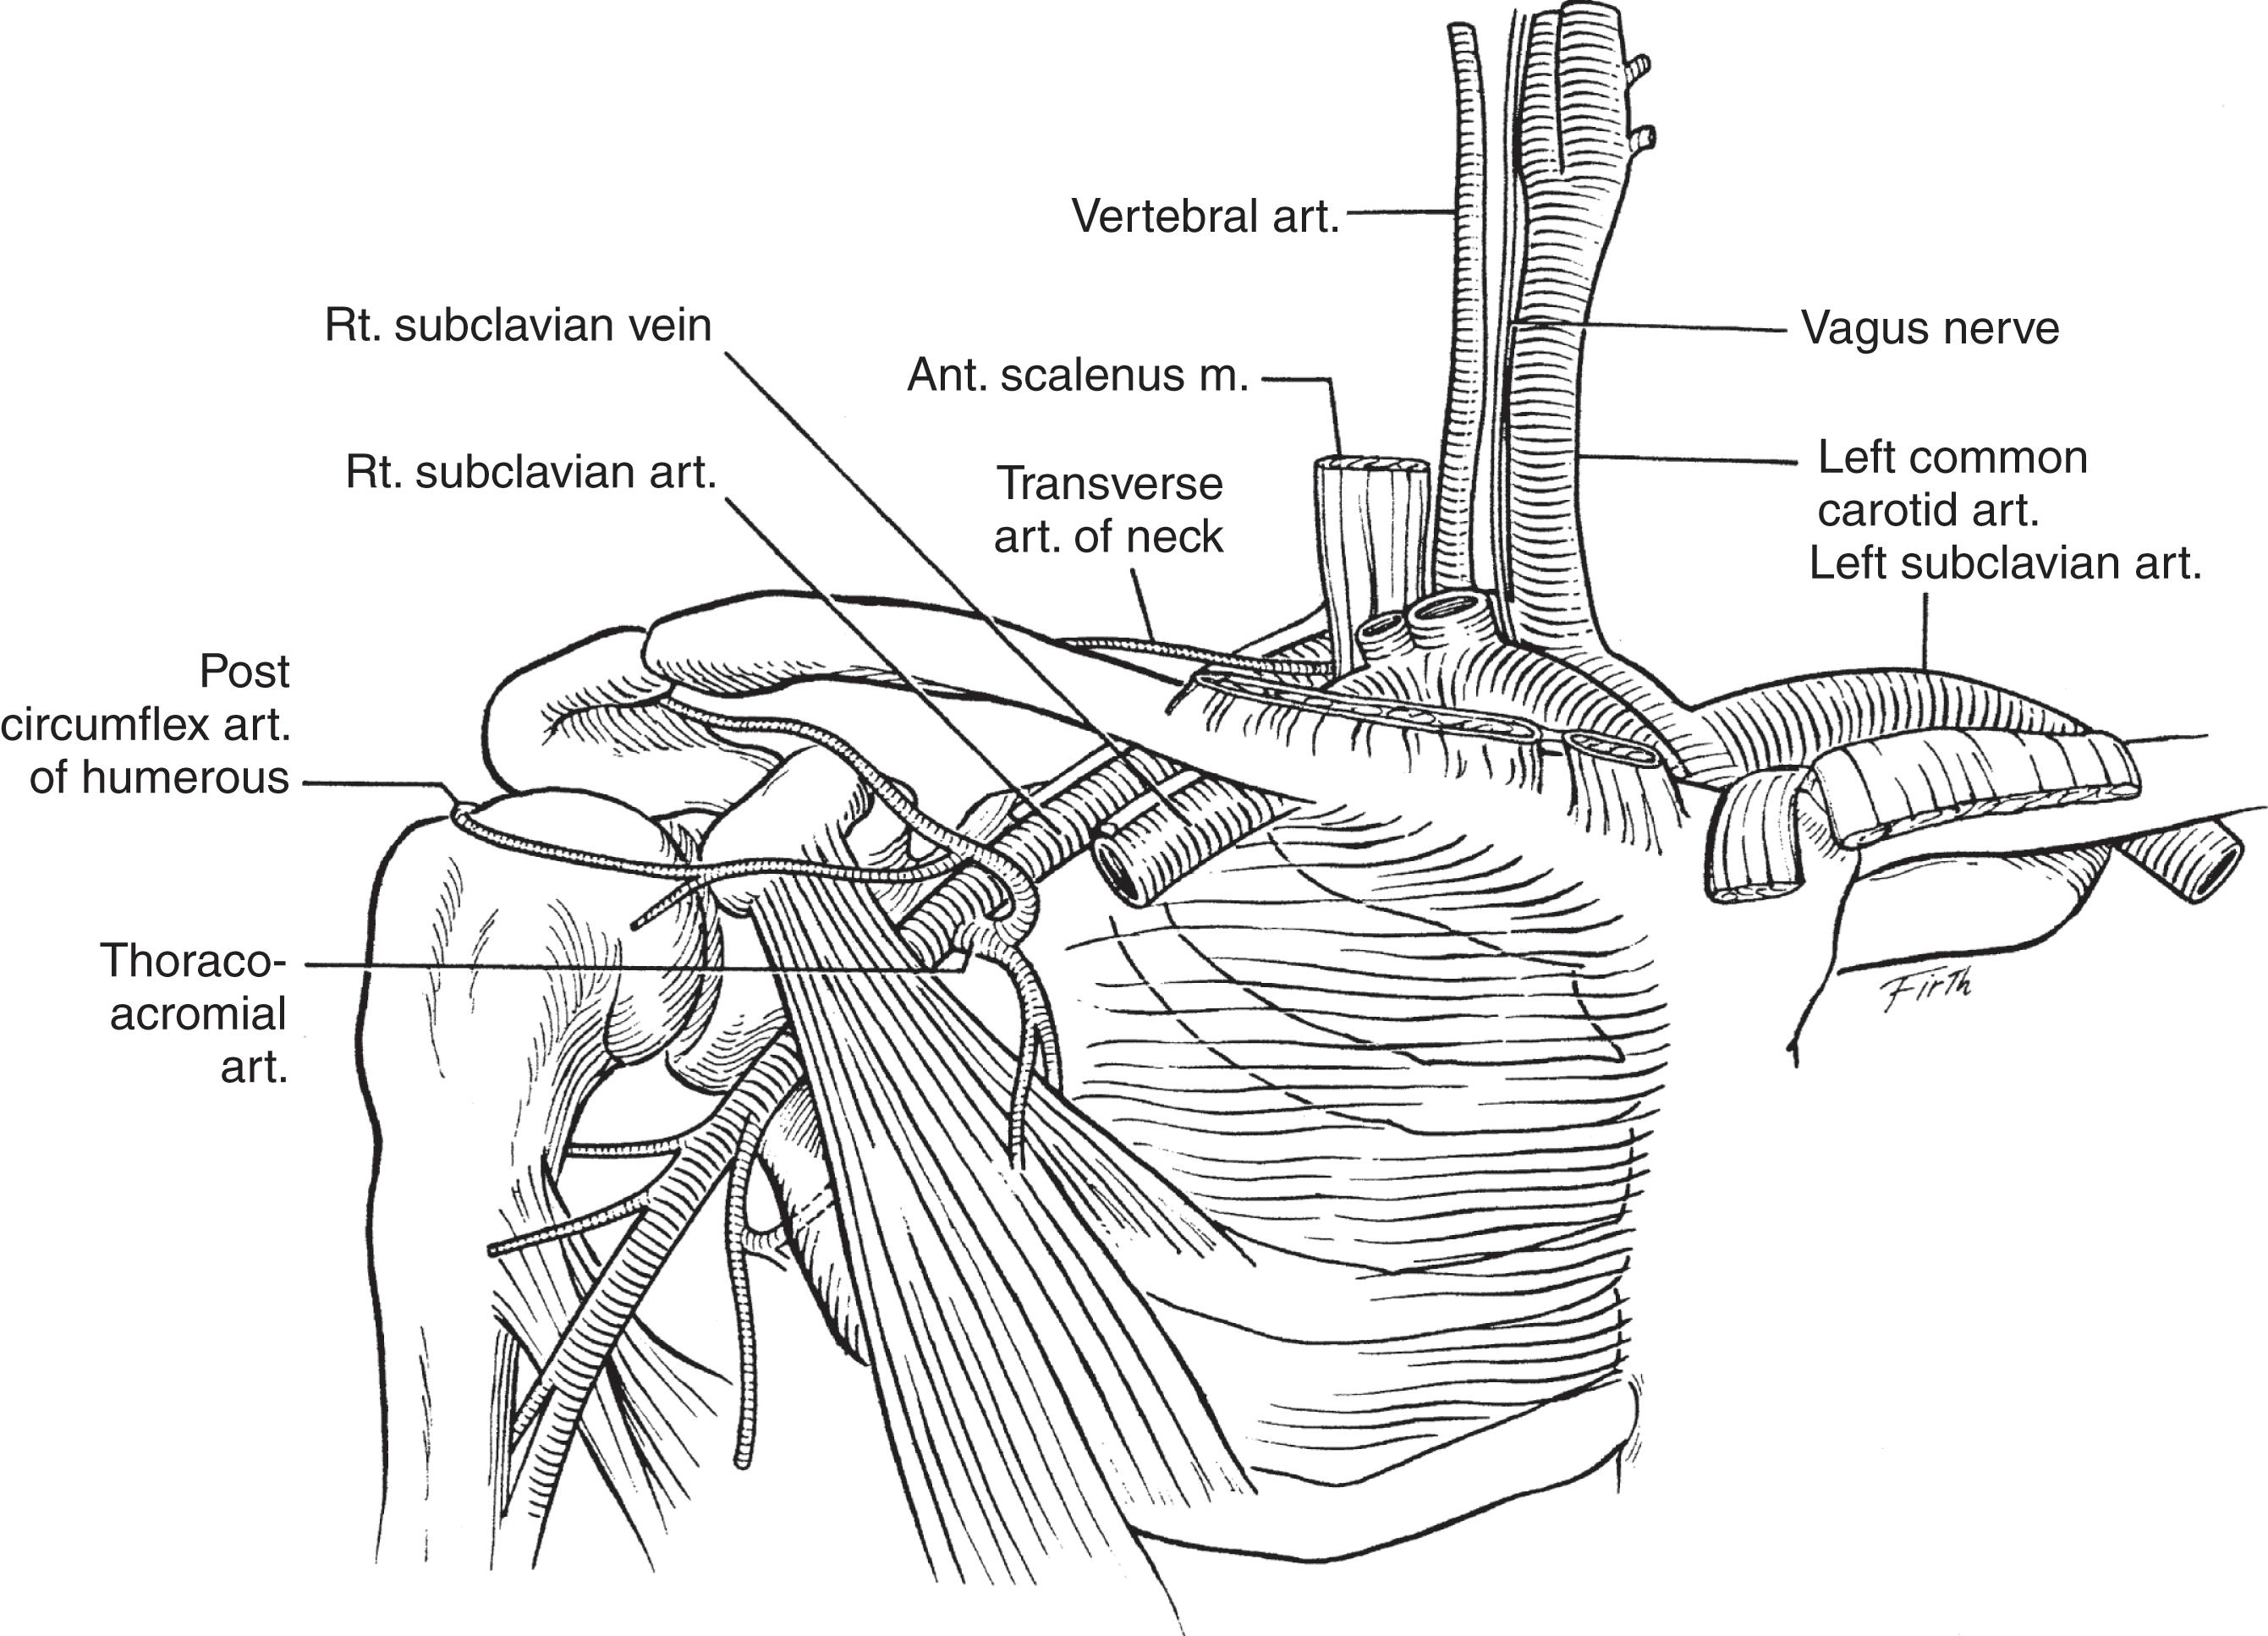 FIGURE 1, Anatomy of subclavian vessels.